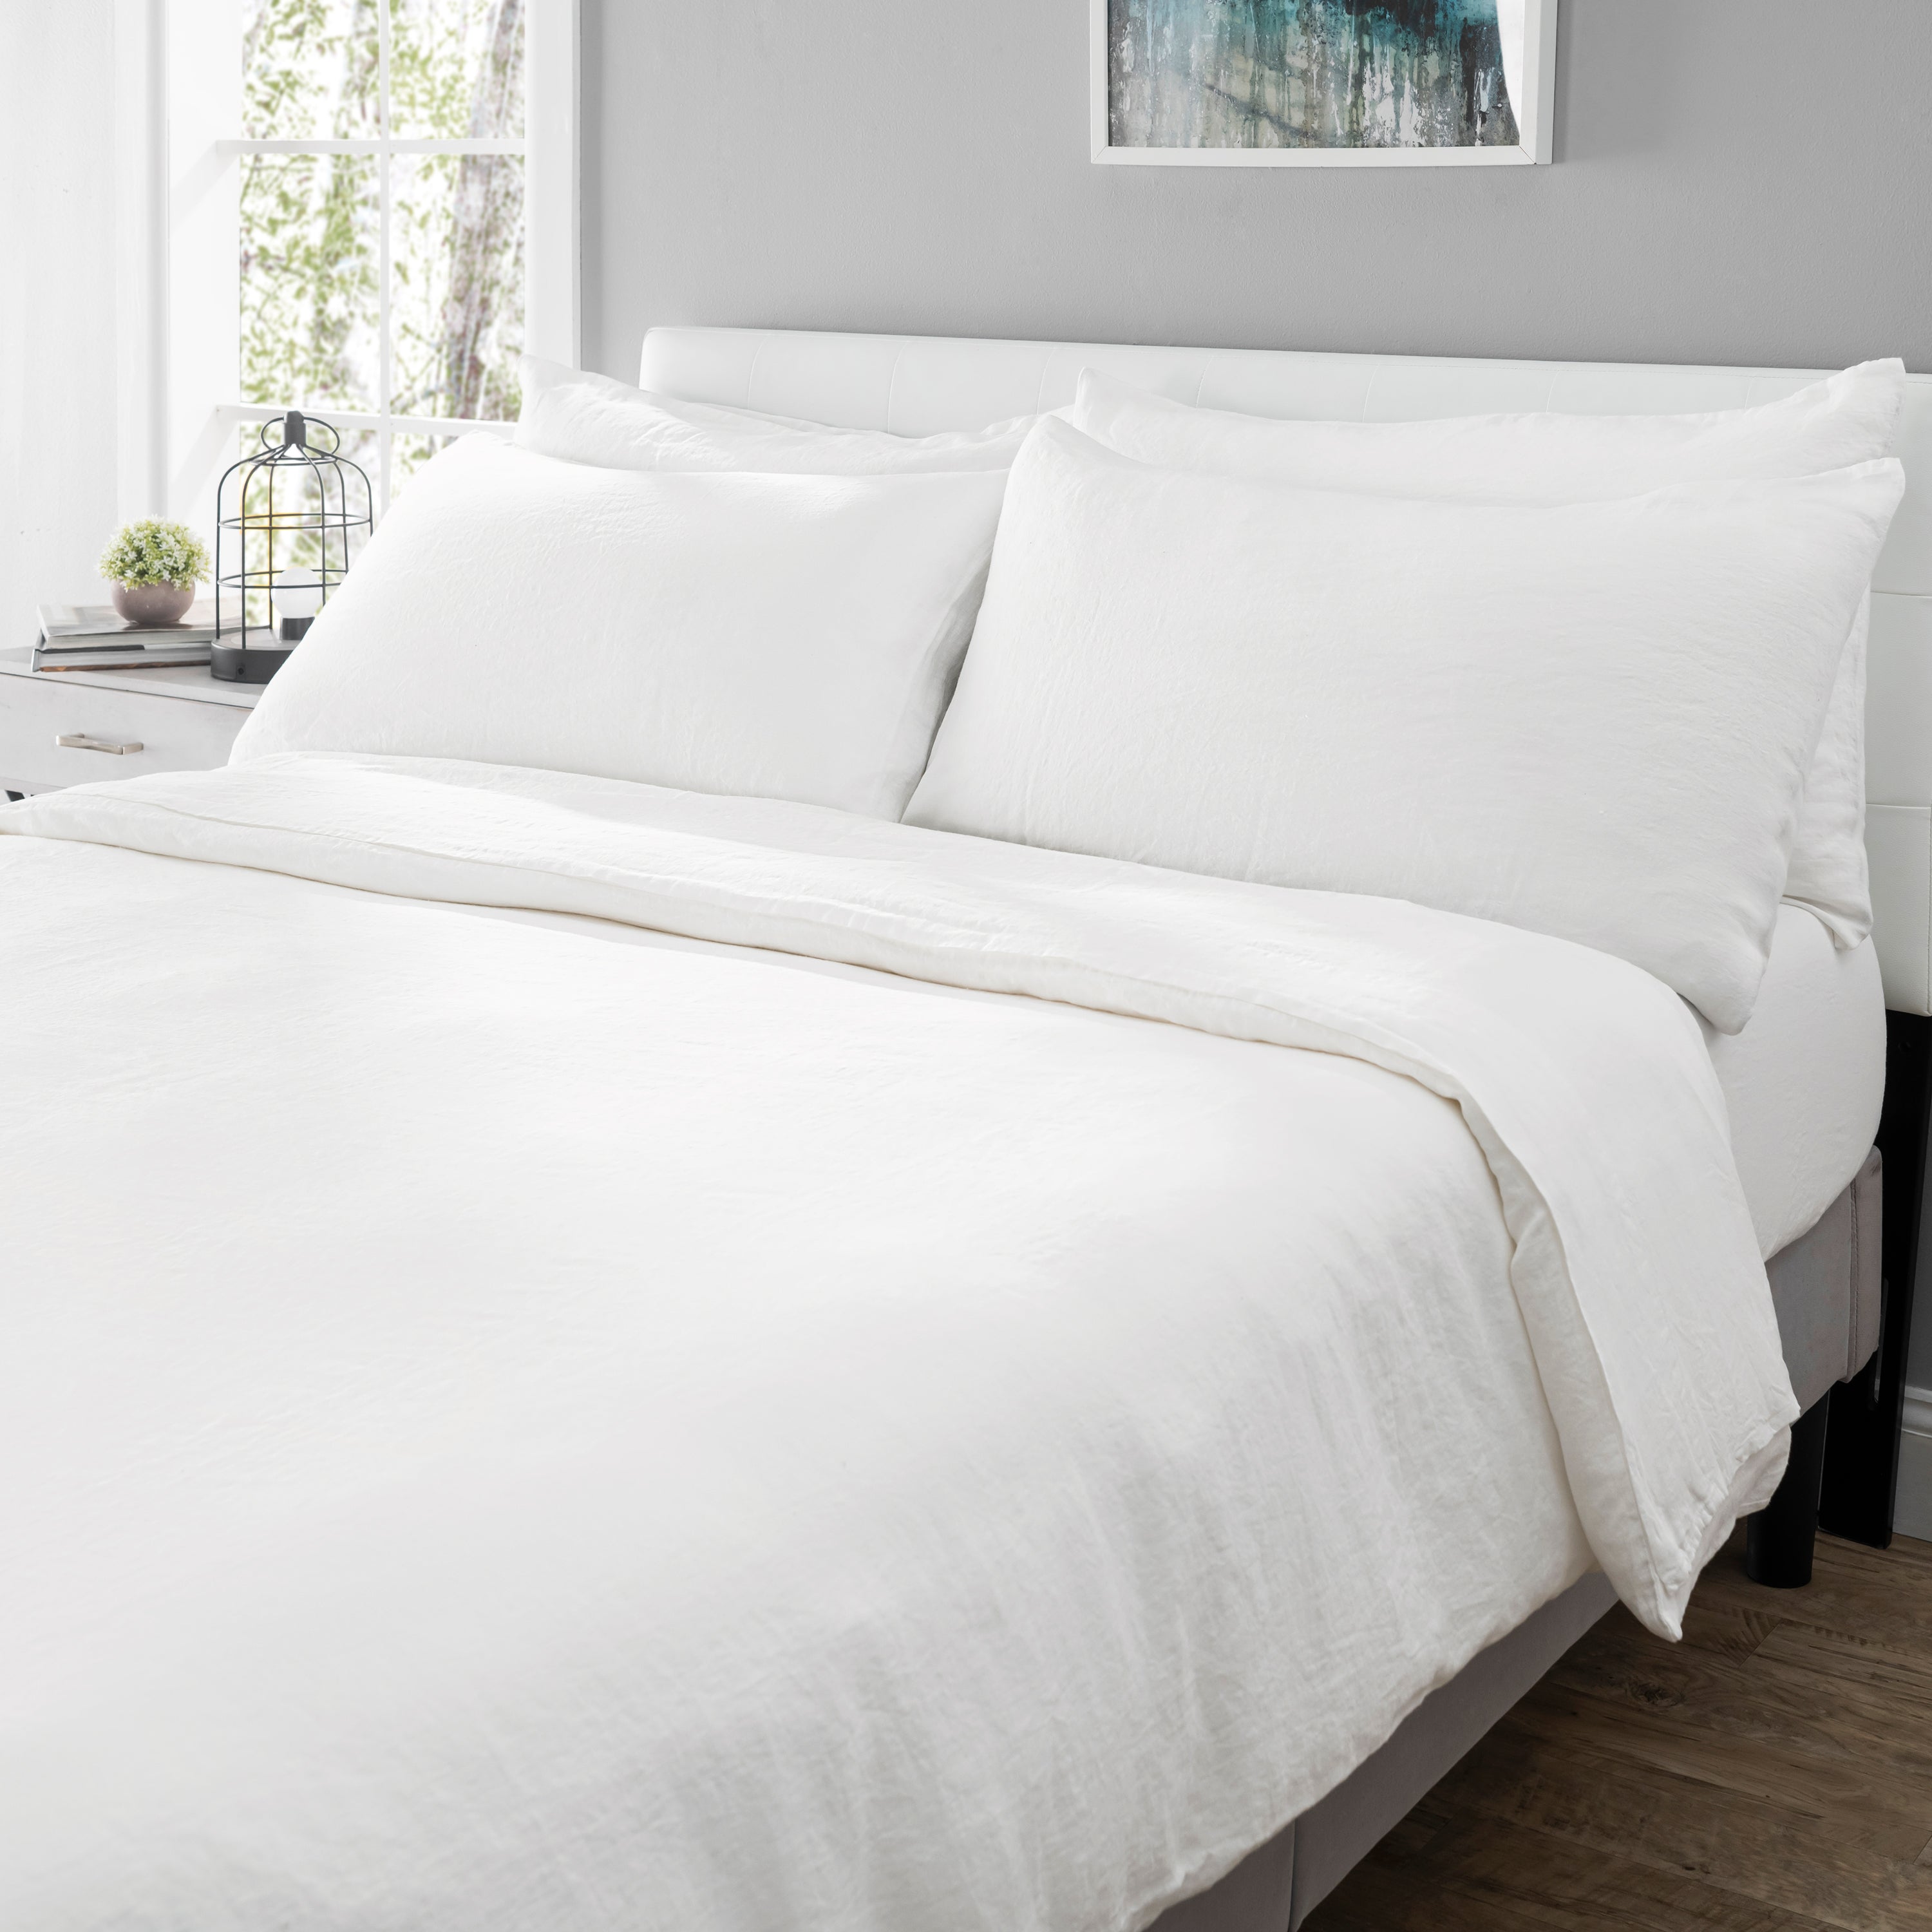 100% Organic Hemp Bed Sheet Collection Delilah Home